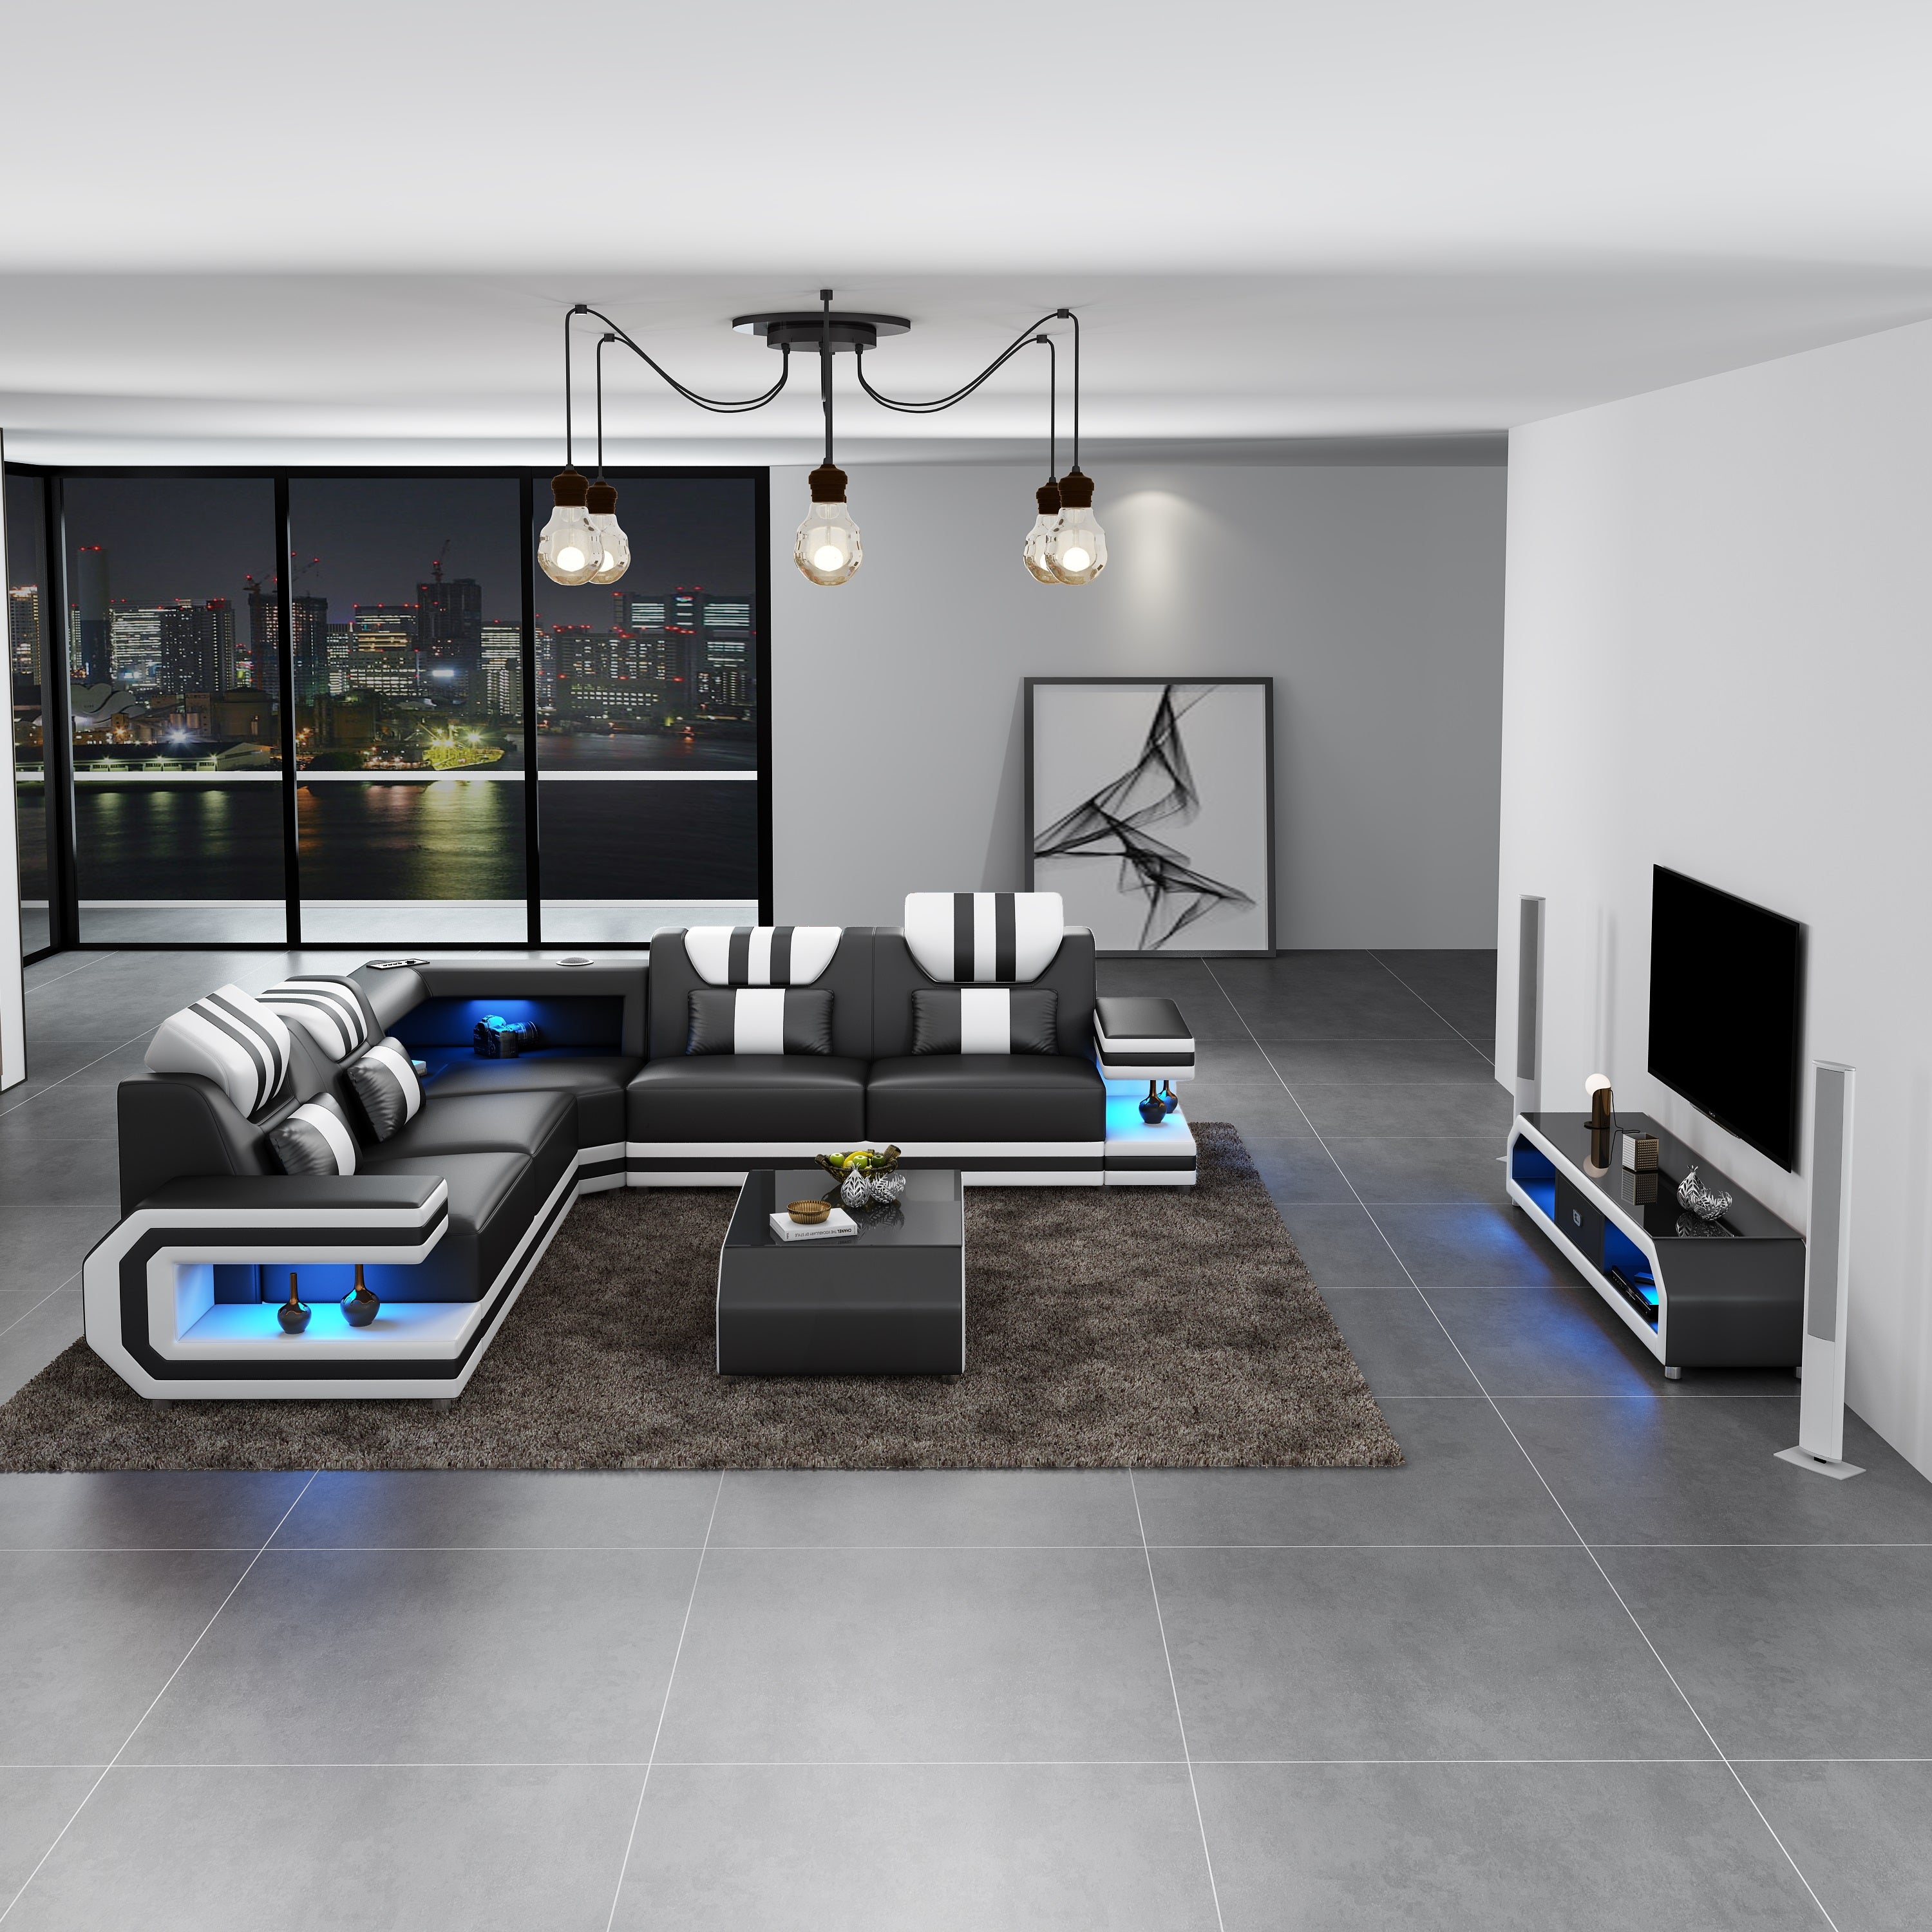 European Furniture - Lightsaber LED Sectional Dual Recliners Black White Italian Leather - LED-87770-BW-DRR - New Star Living